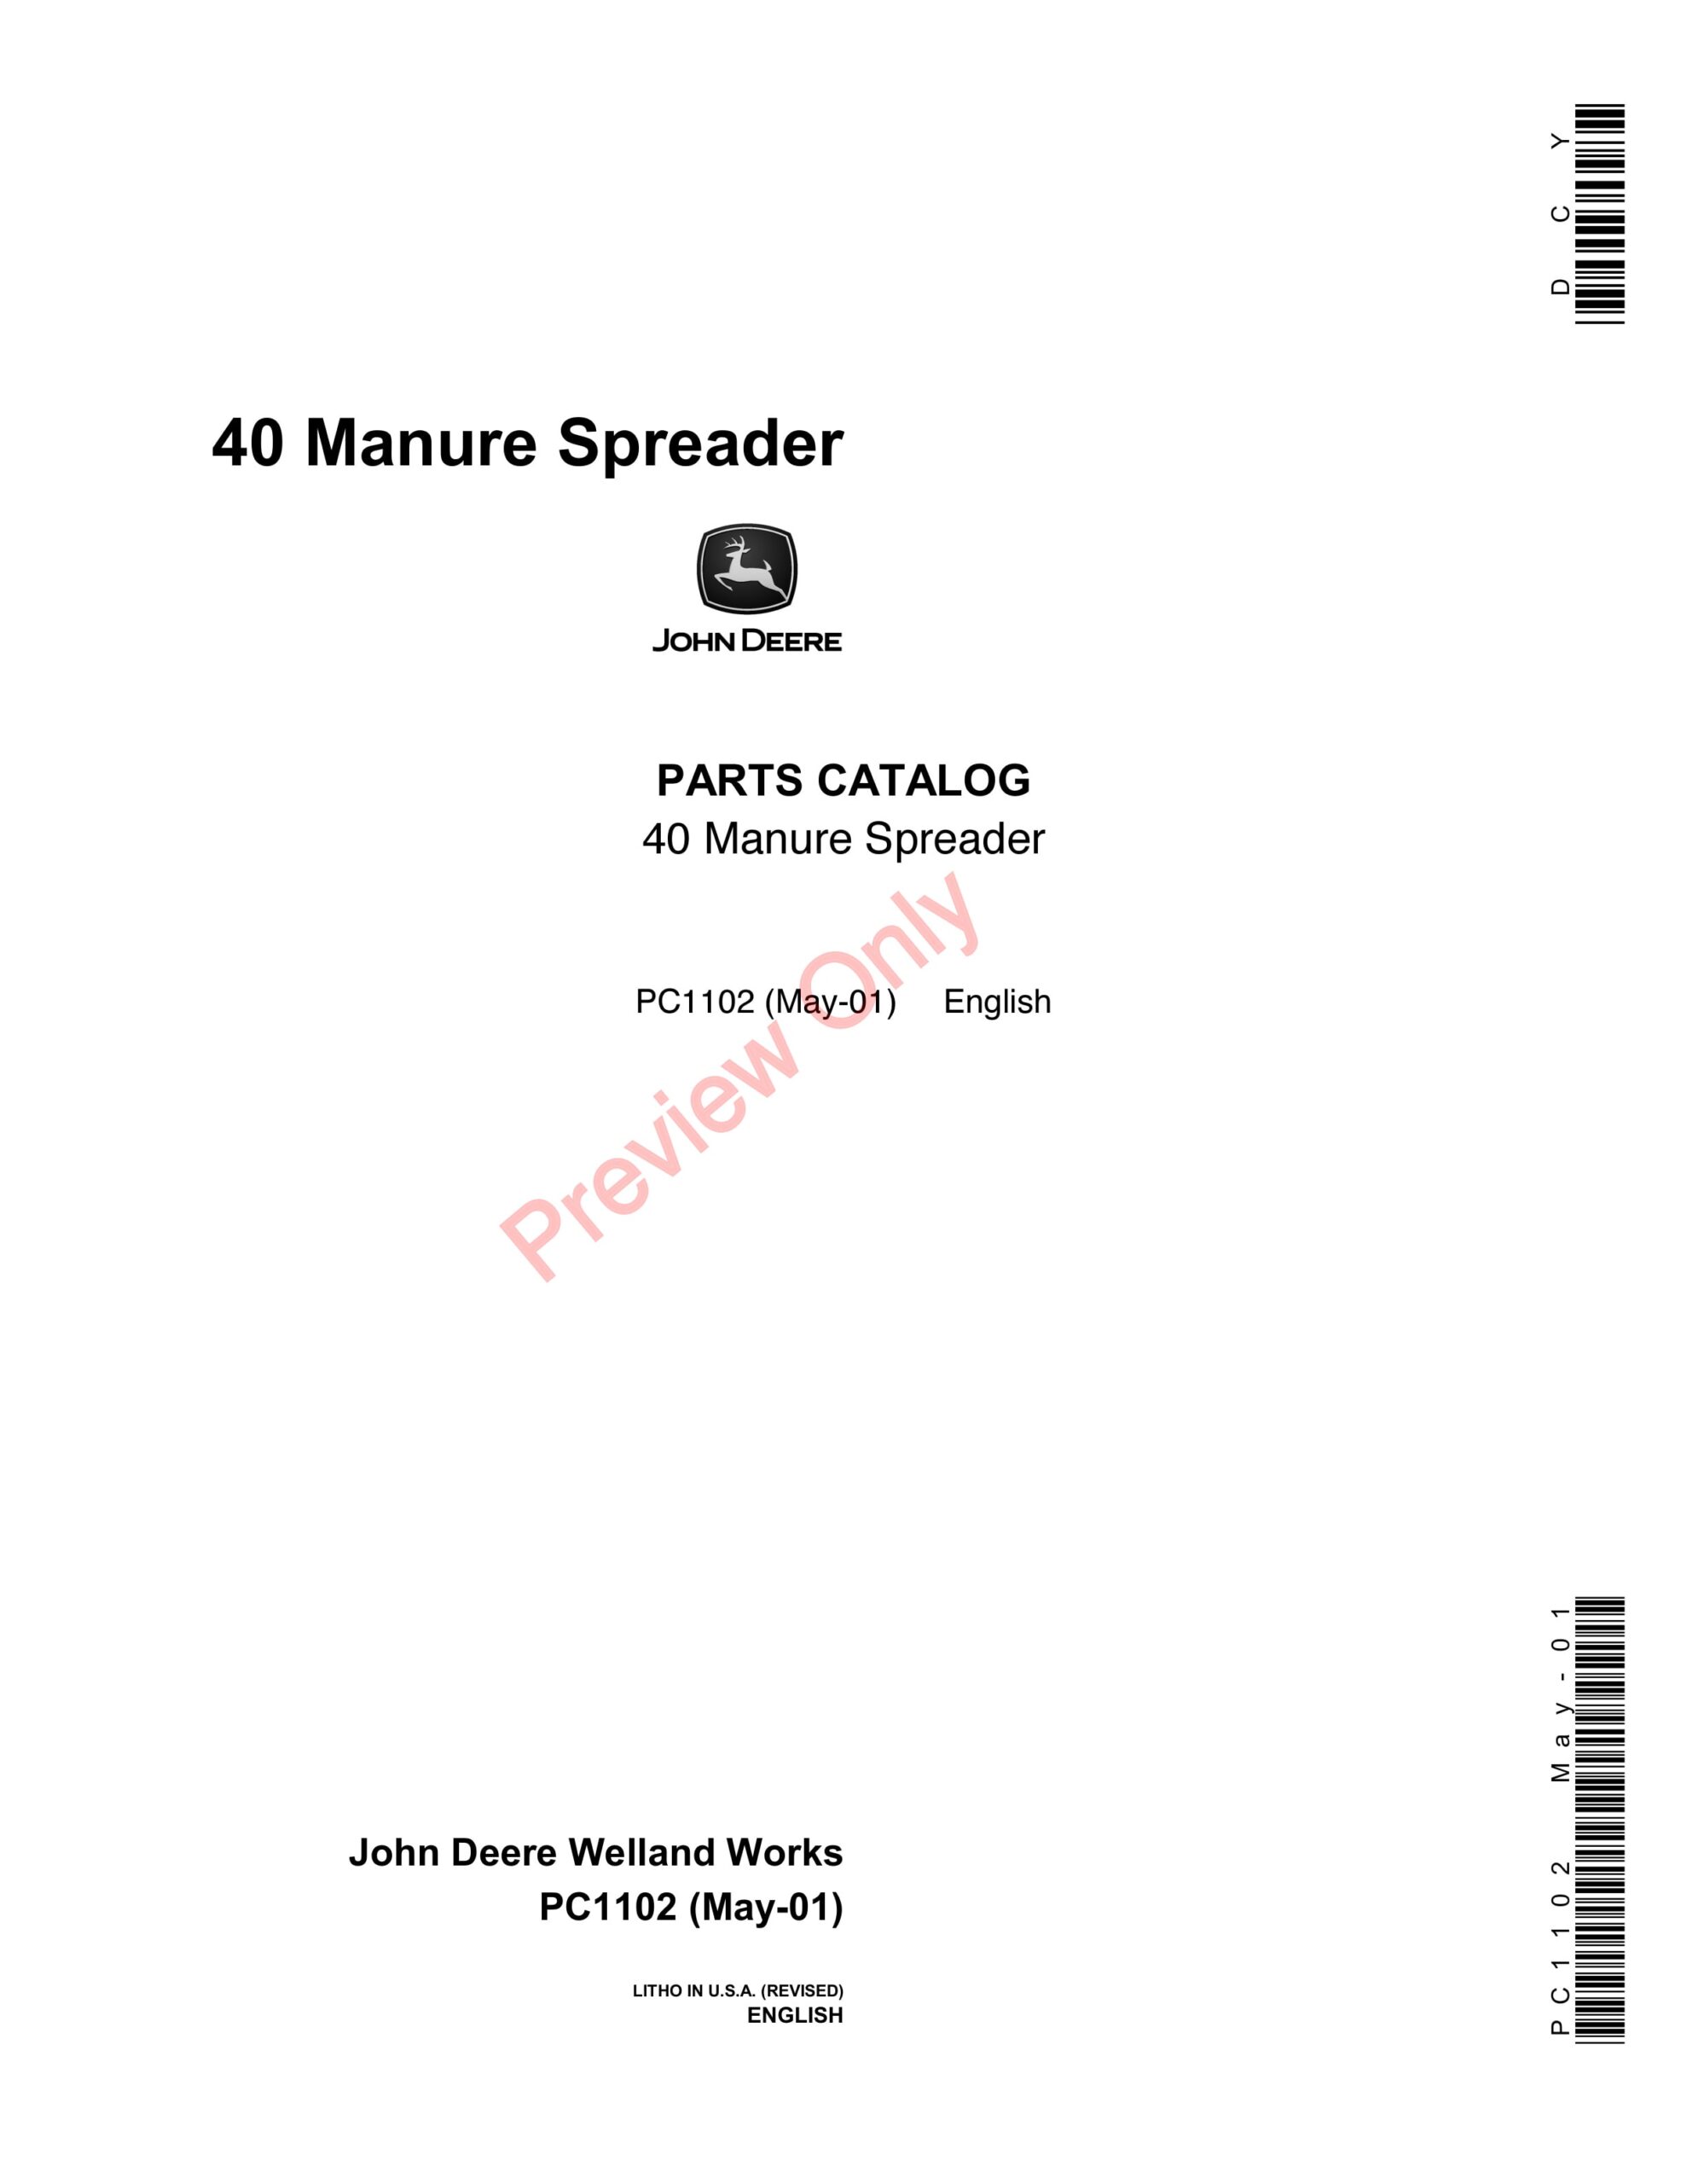 John Deere 40 Manure Spreader Parts Catalog PC1102 02JUN11-1